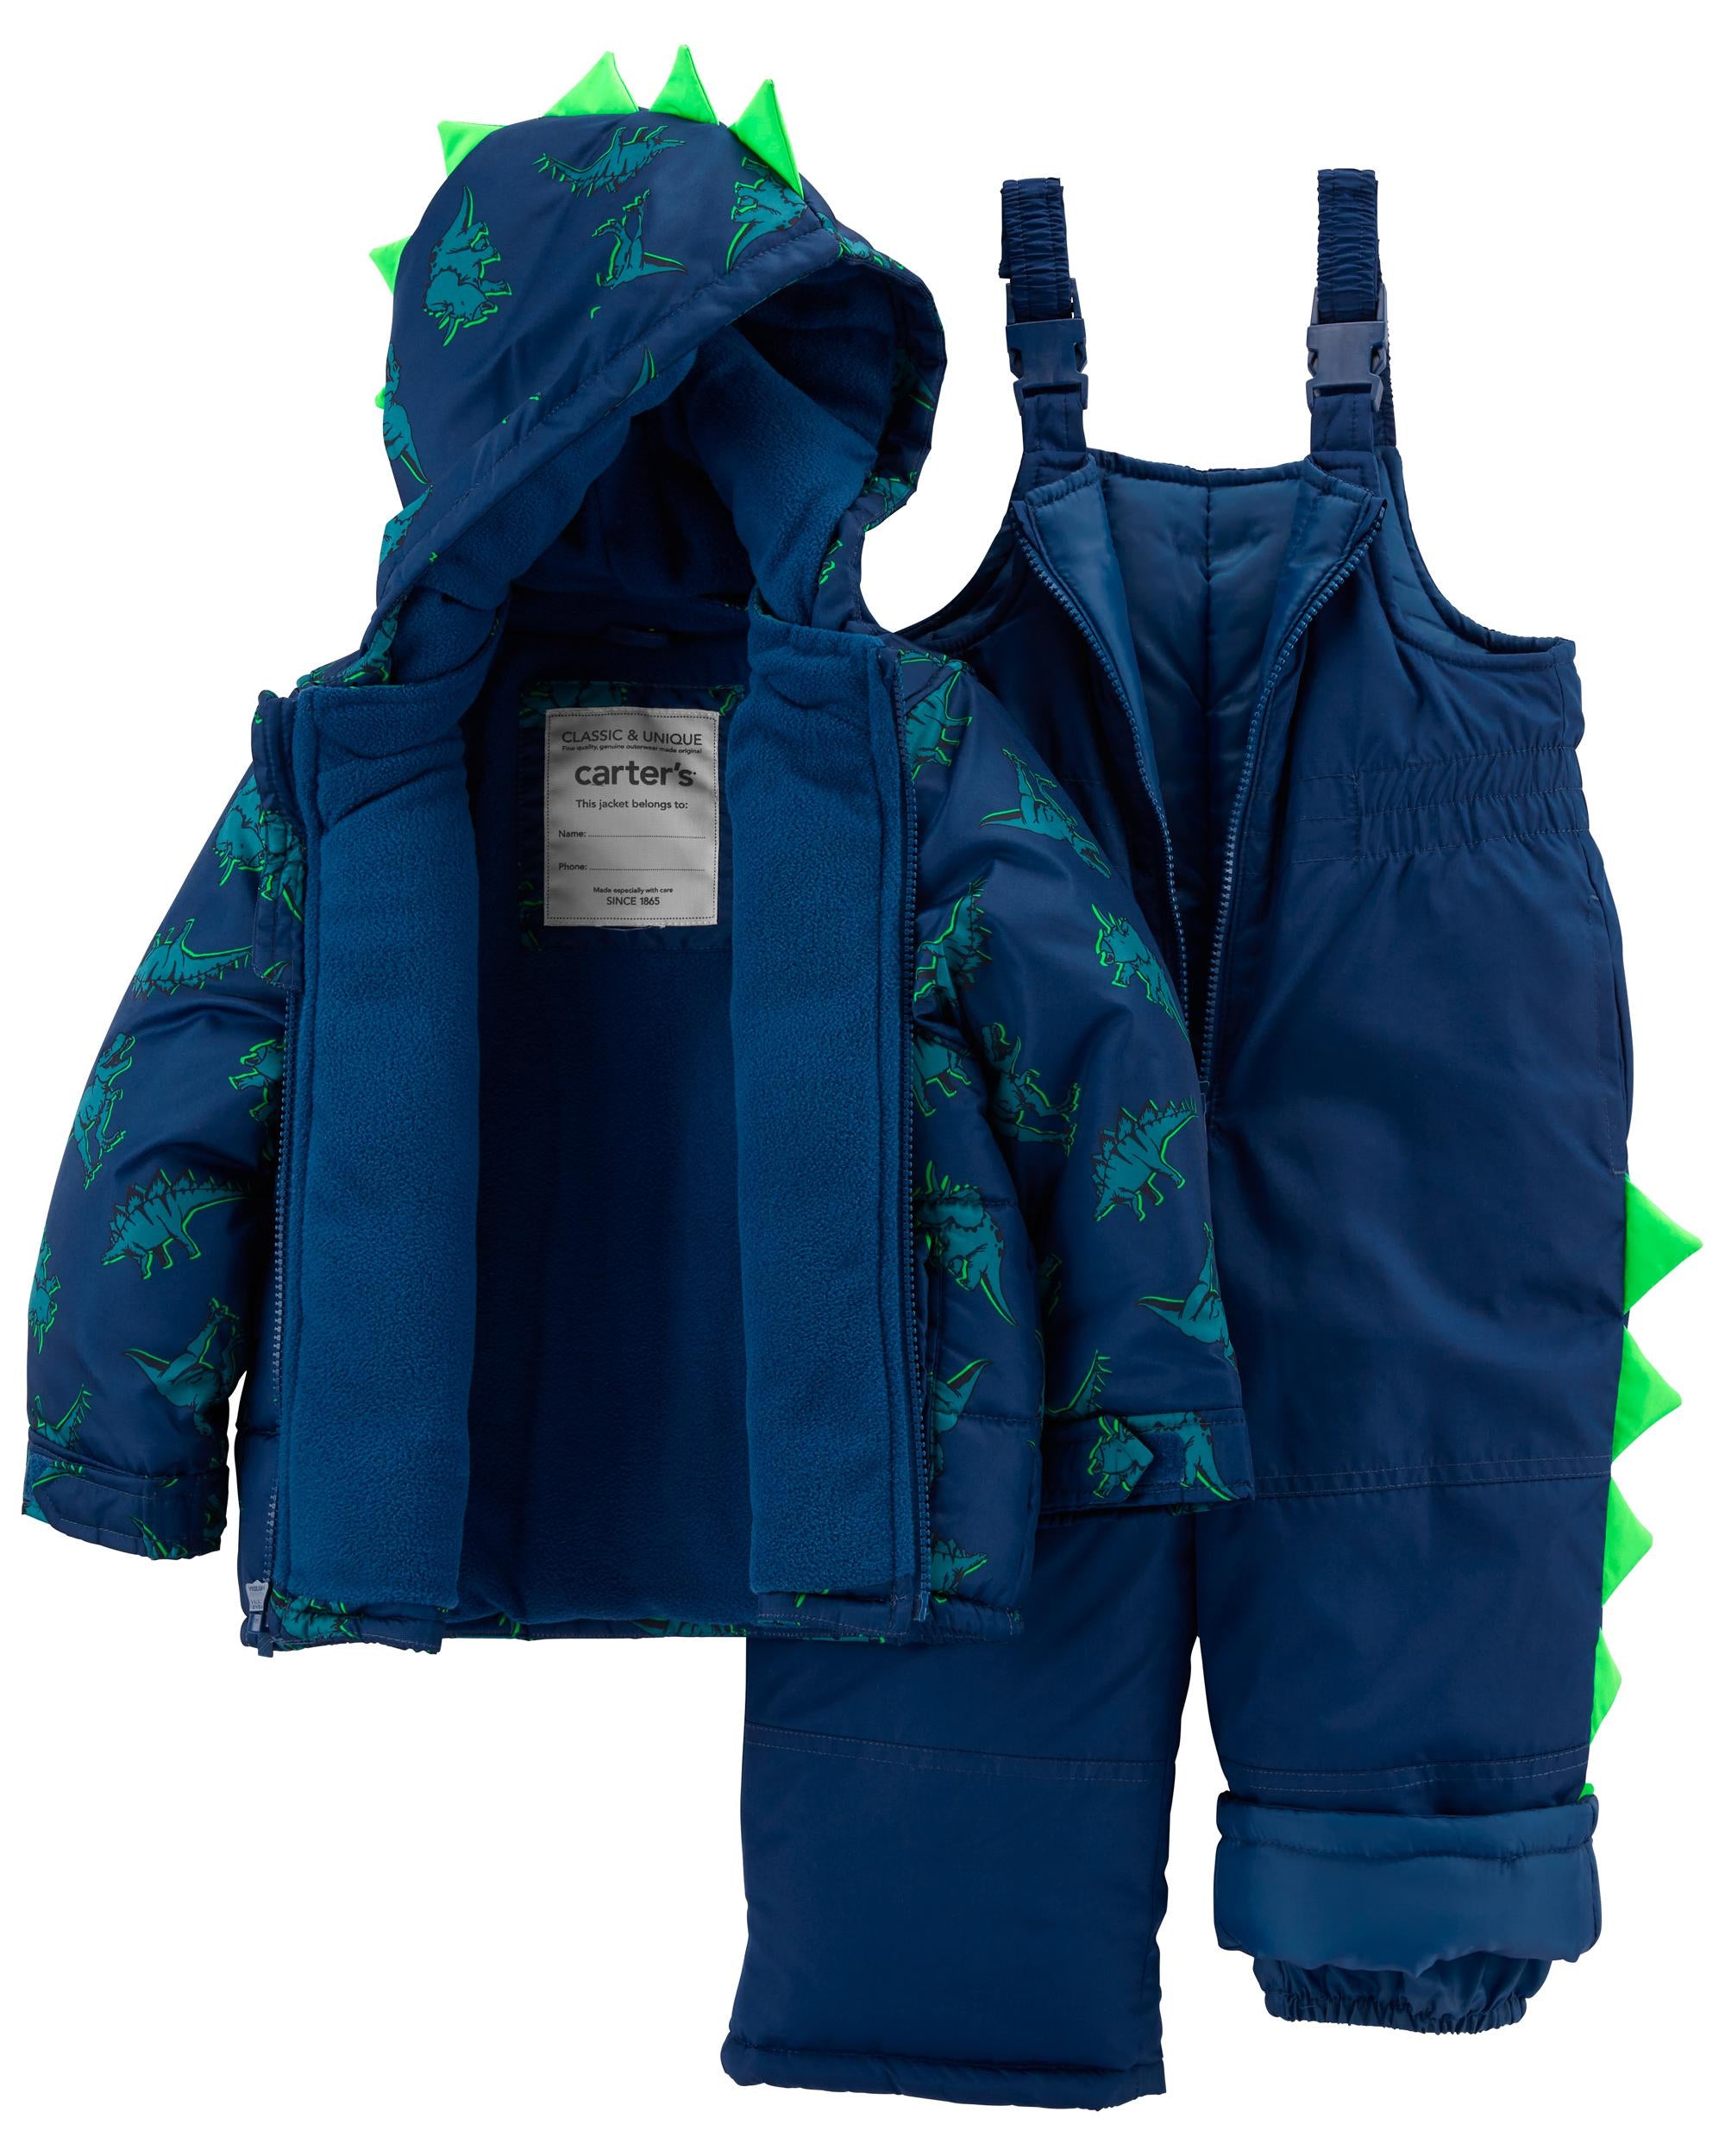 Carters Boys 12-24 Months 2-Piece Dinosaur Snowsuit with Scales